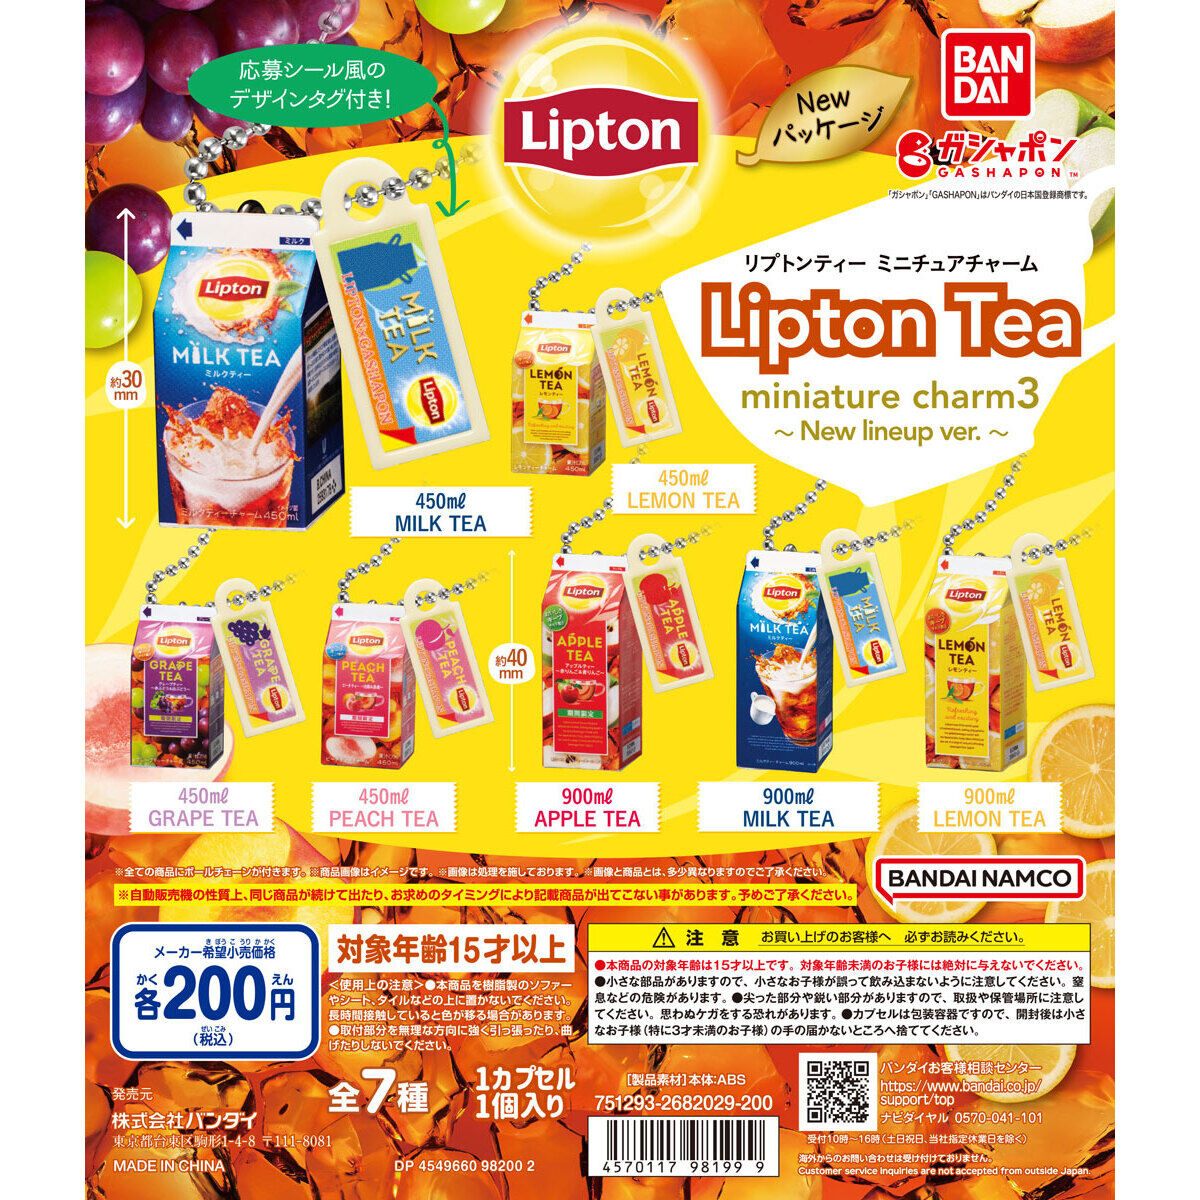 Lipton Tea miniature charm-リプトンティーミニチュアチャーム-3～New line up ver.～